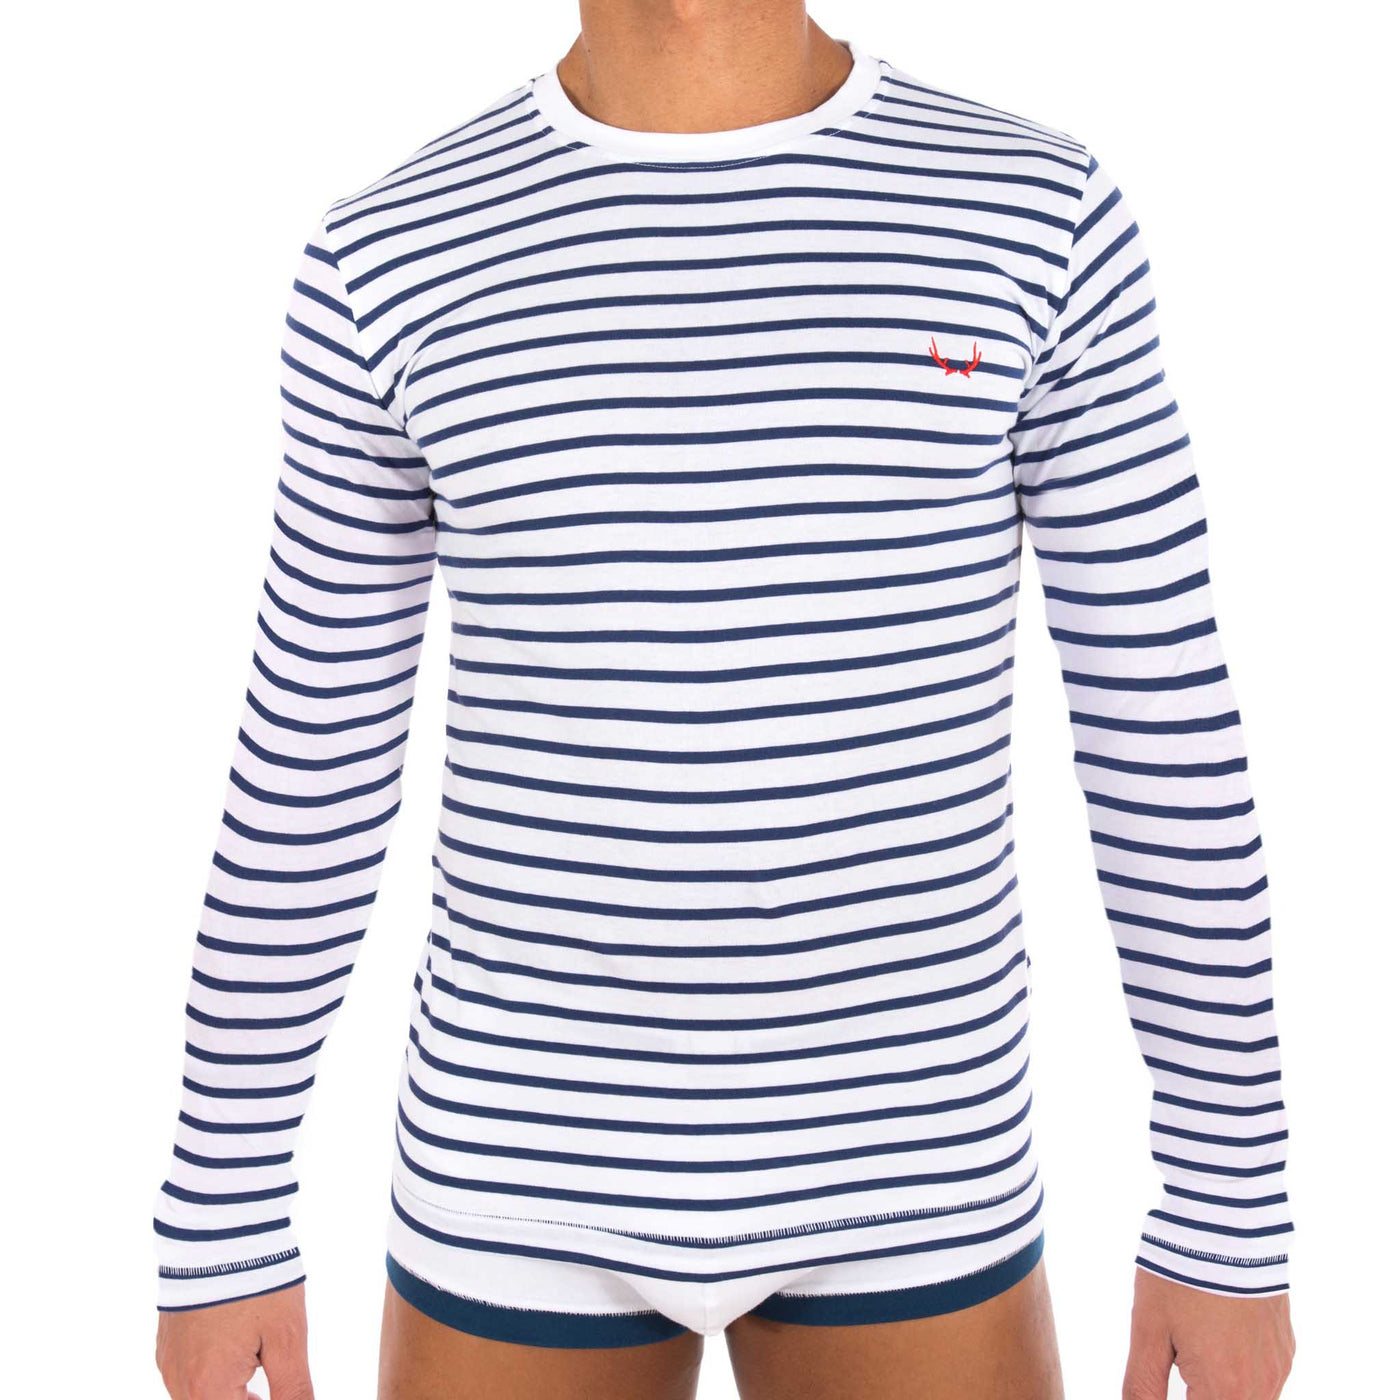 Long sleeves white T-shirt - navy stripes